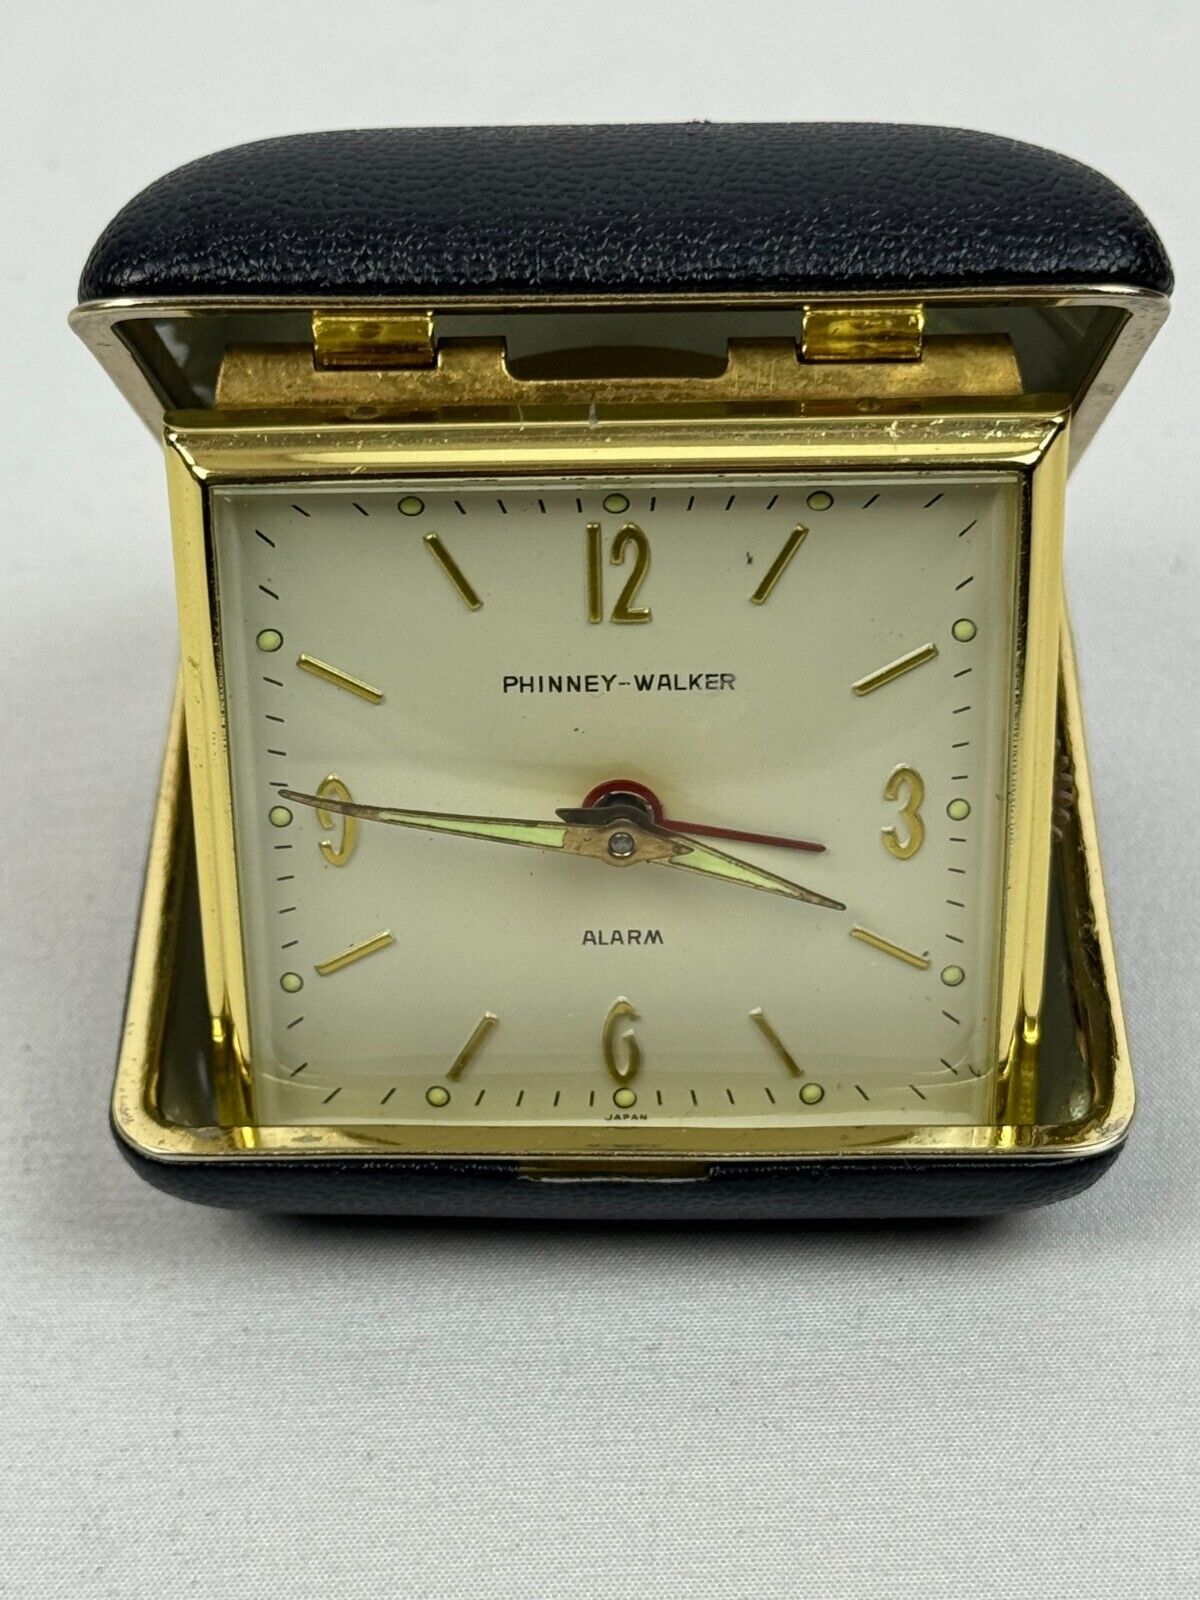 Vintage Phinney-Walker Travel Alarm Clock Glows In Dark Made in Japan TESTED